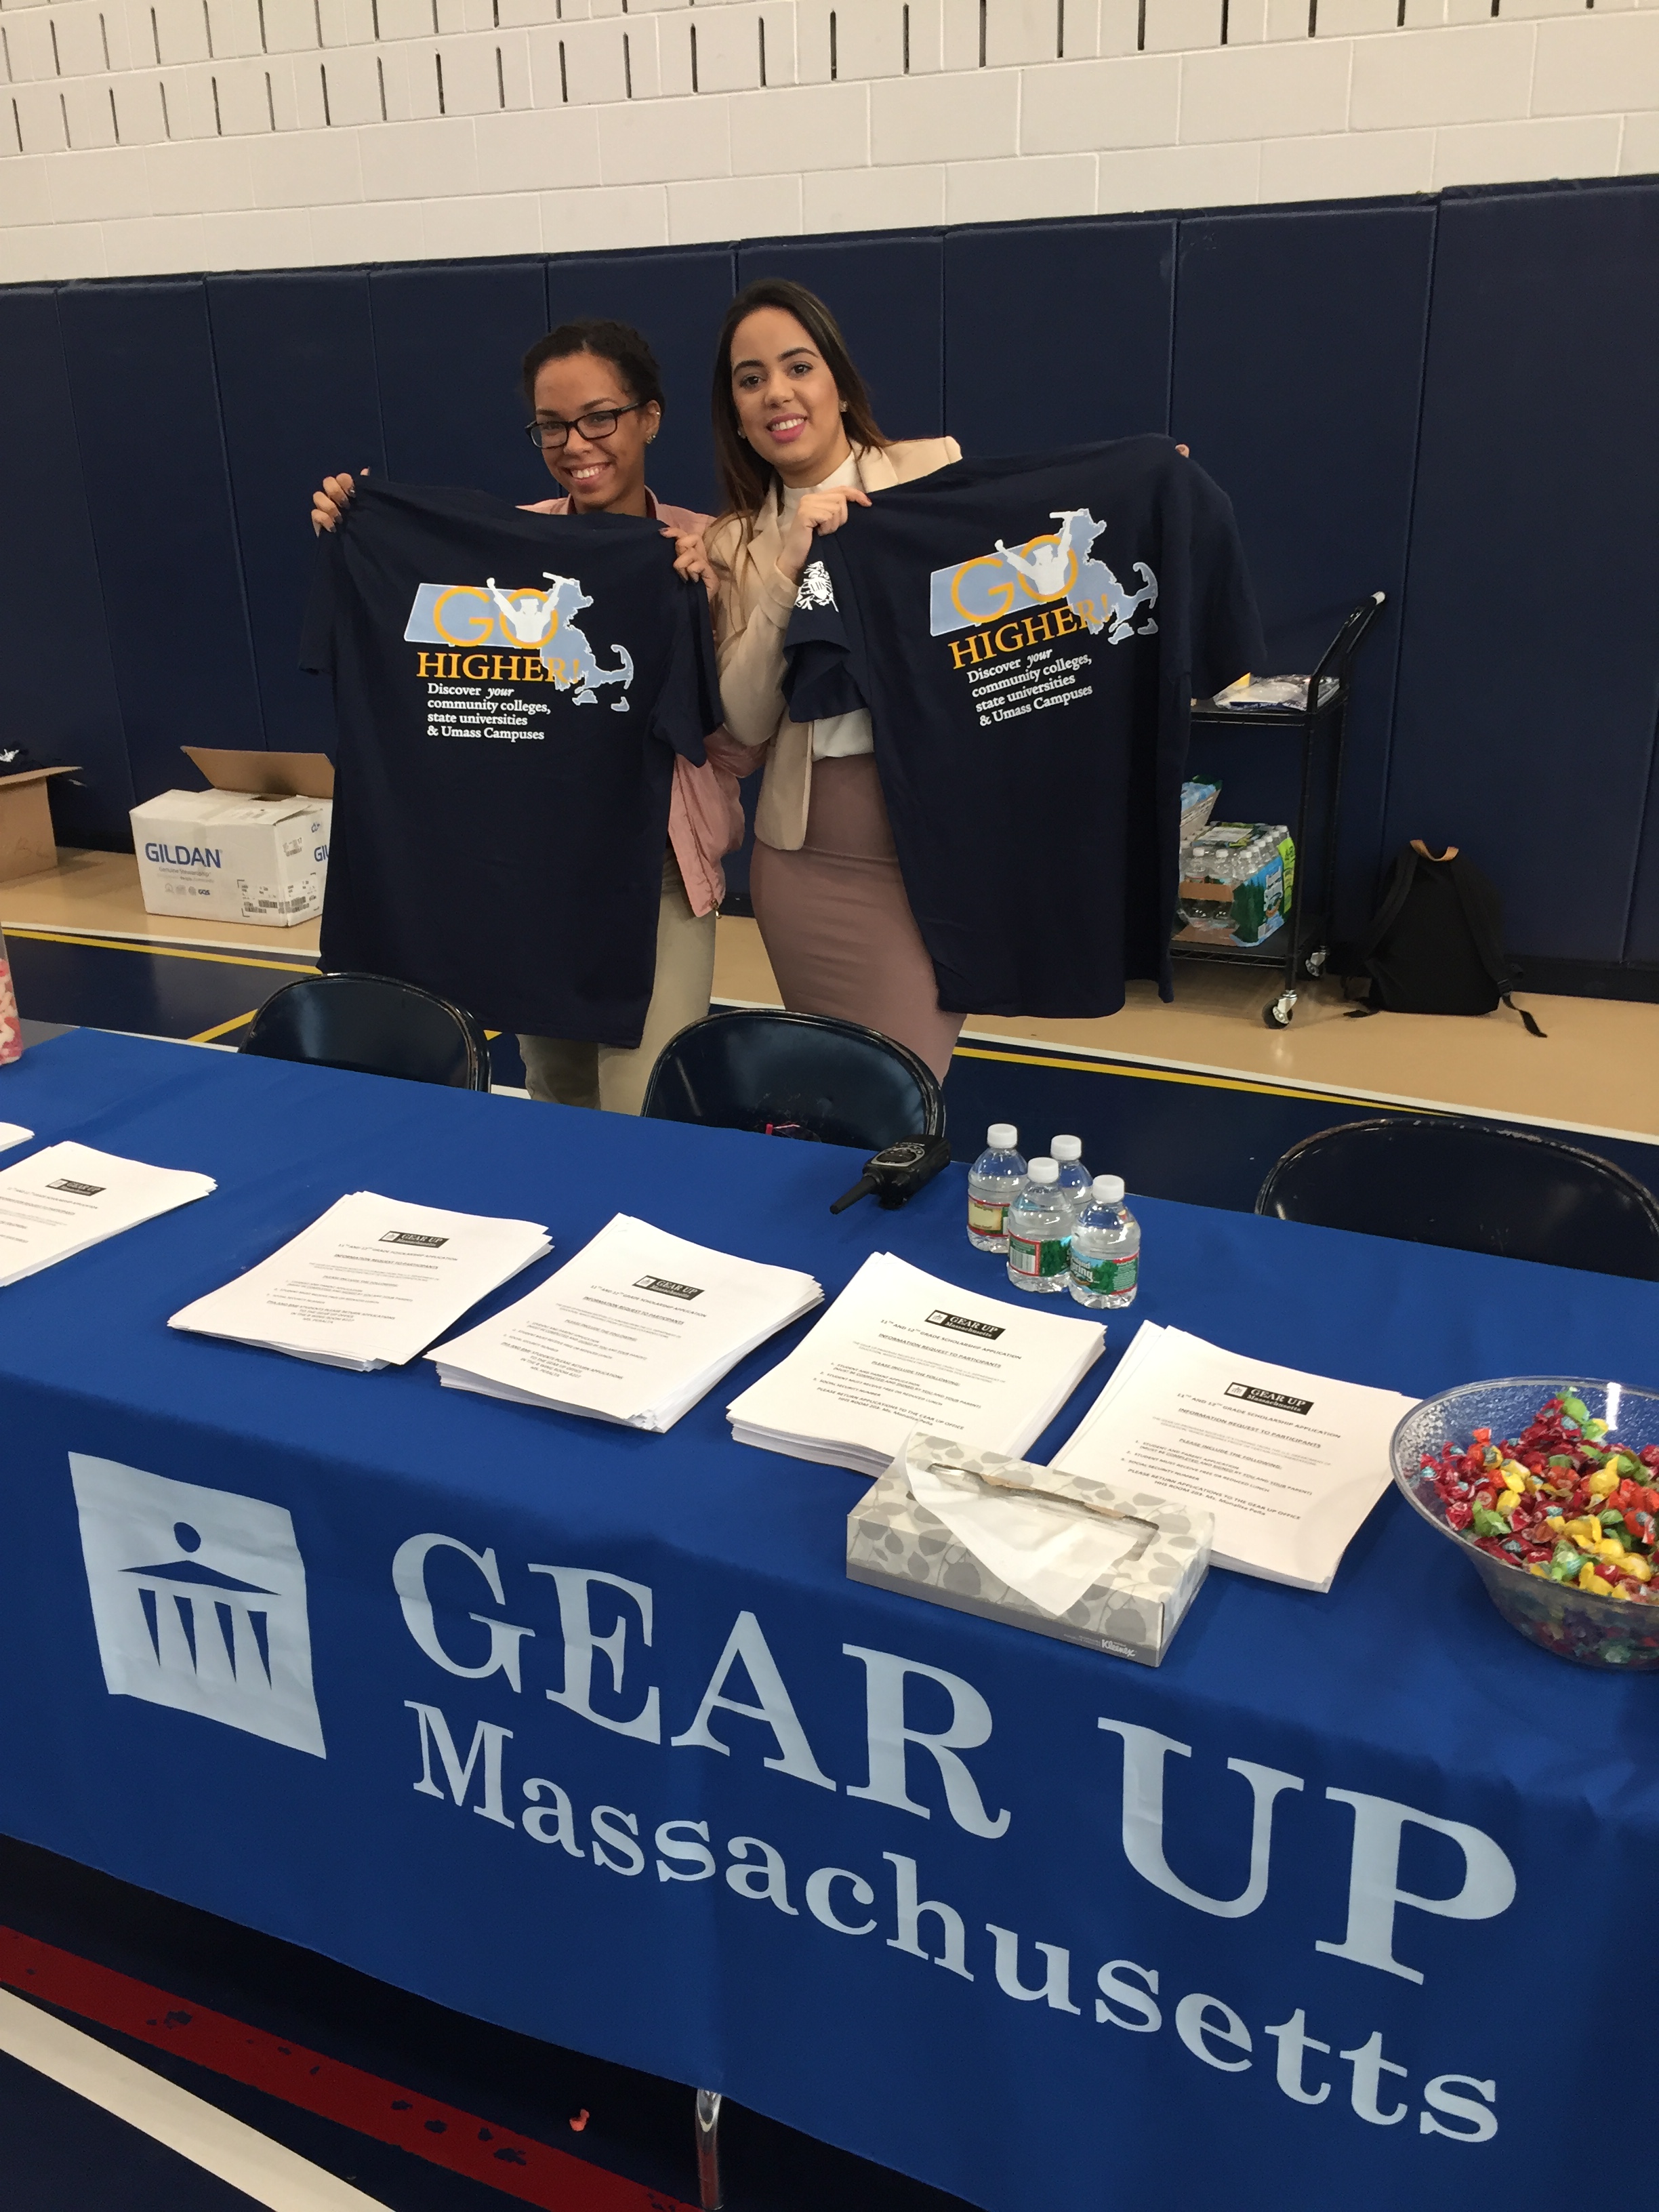 GEAR UP! / Massachusetts Department of Higher Education